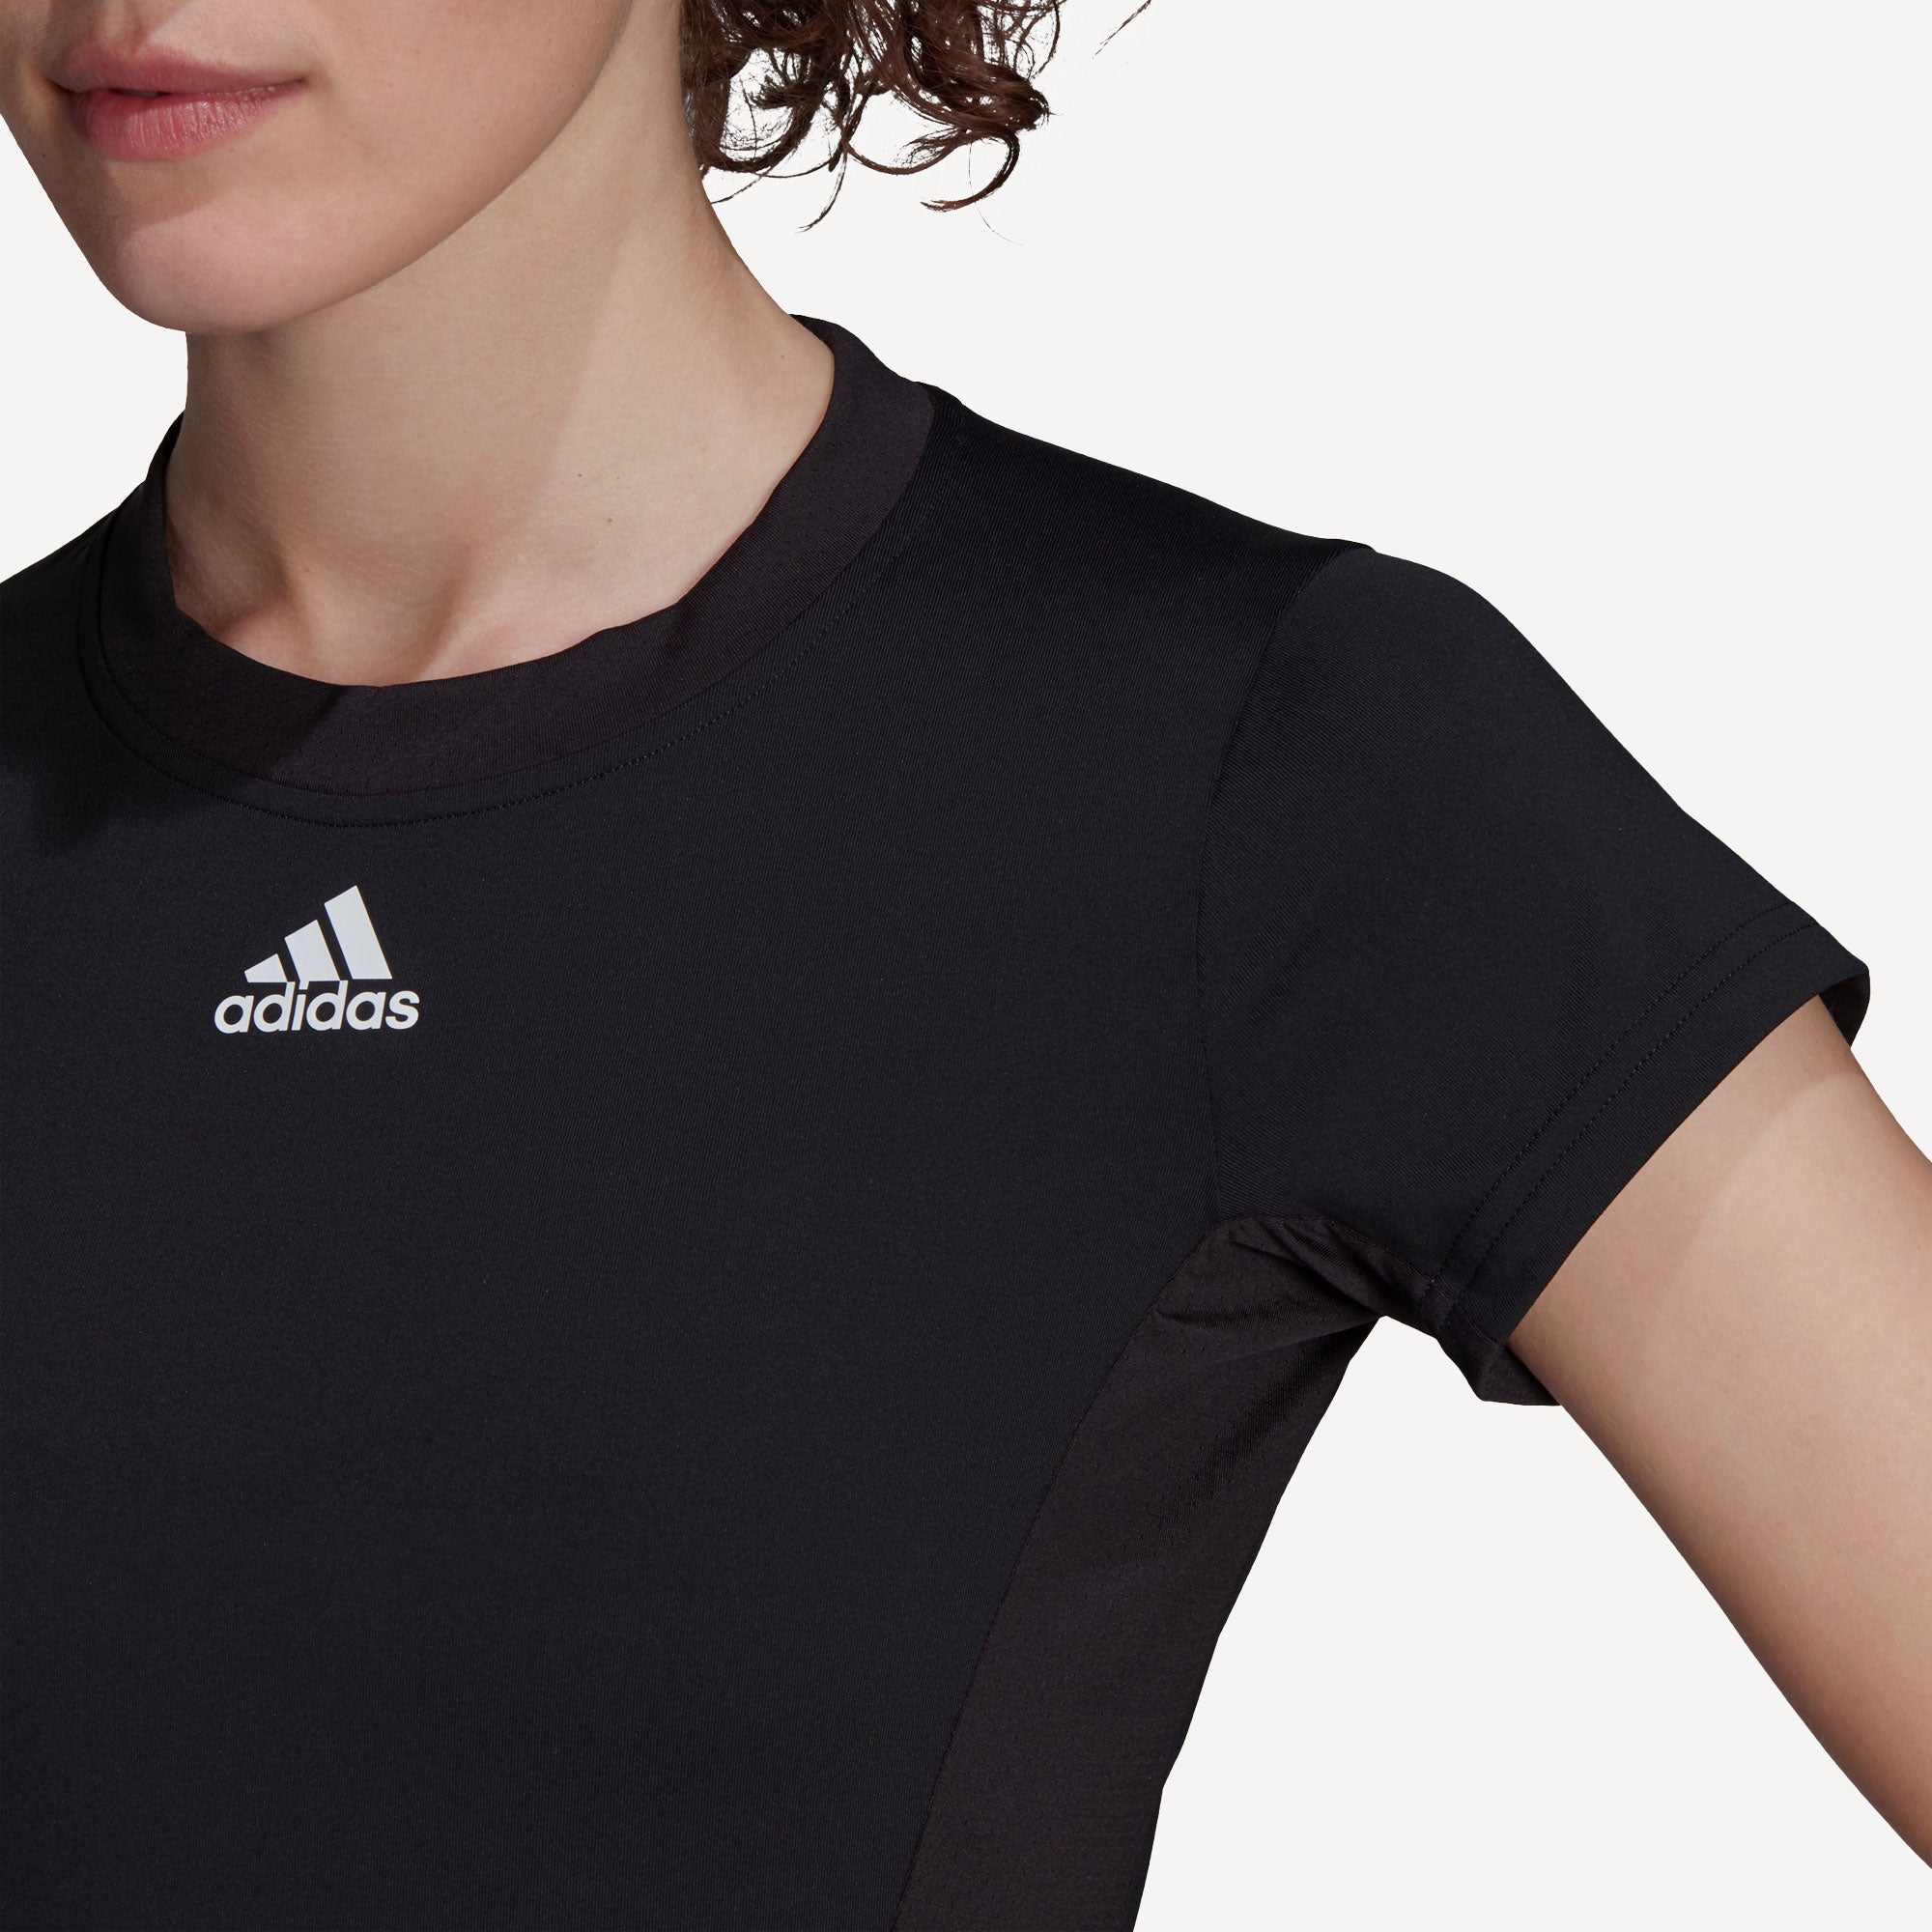 adidas Match Aeroready Women's Tennis Shirt Black (5)